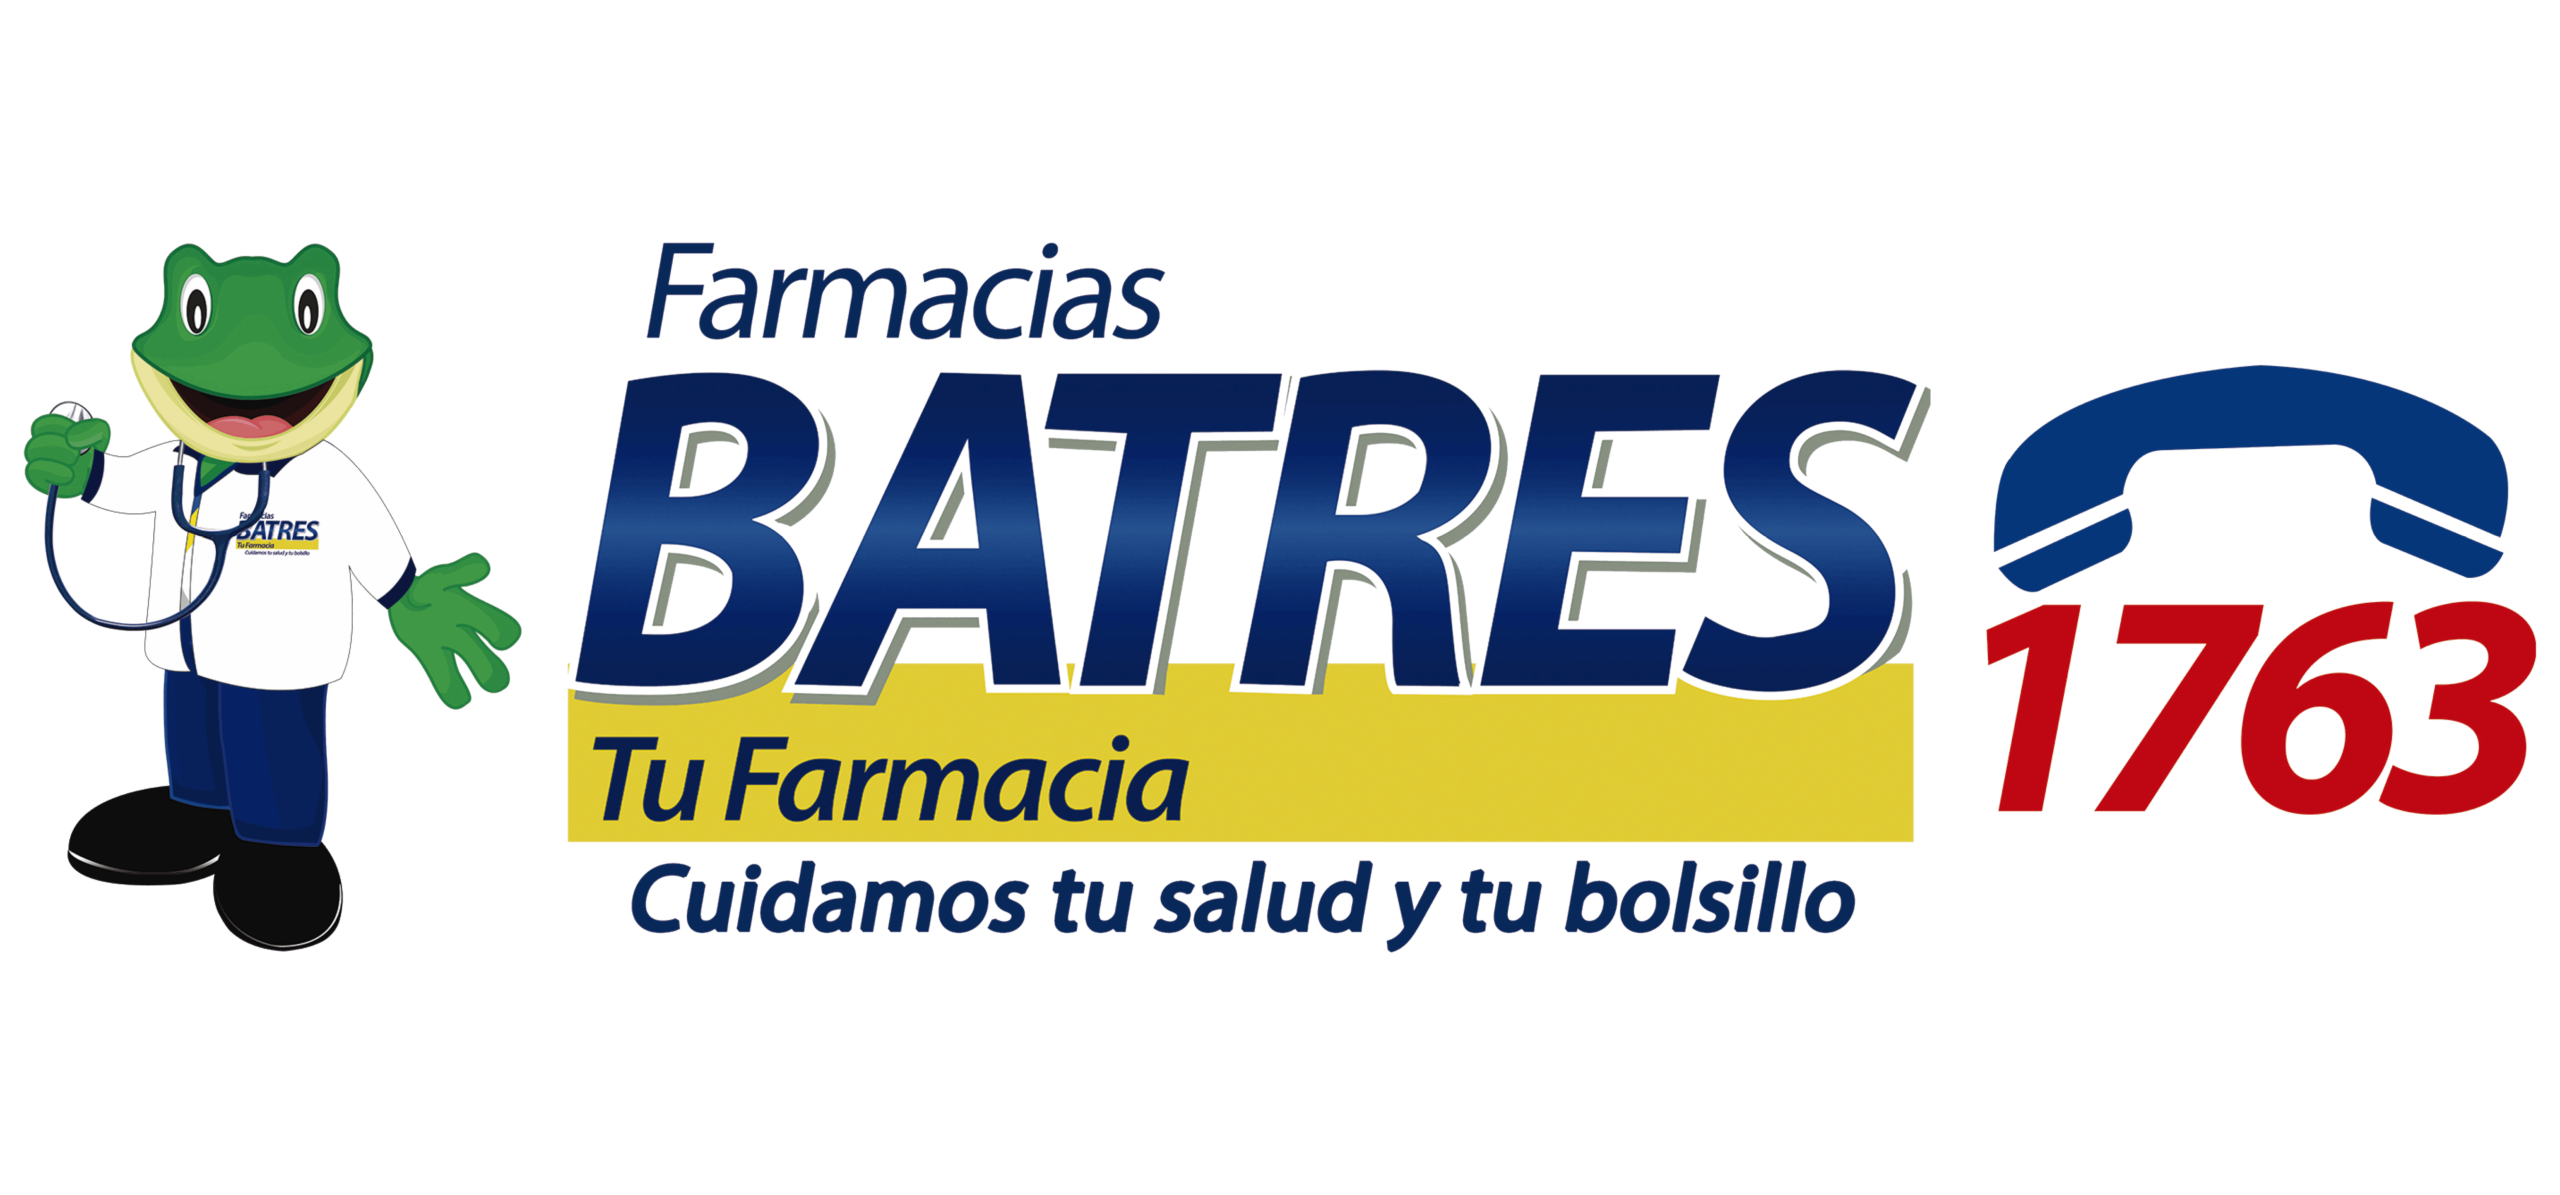 Farmacias Batres Logo